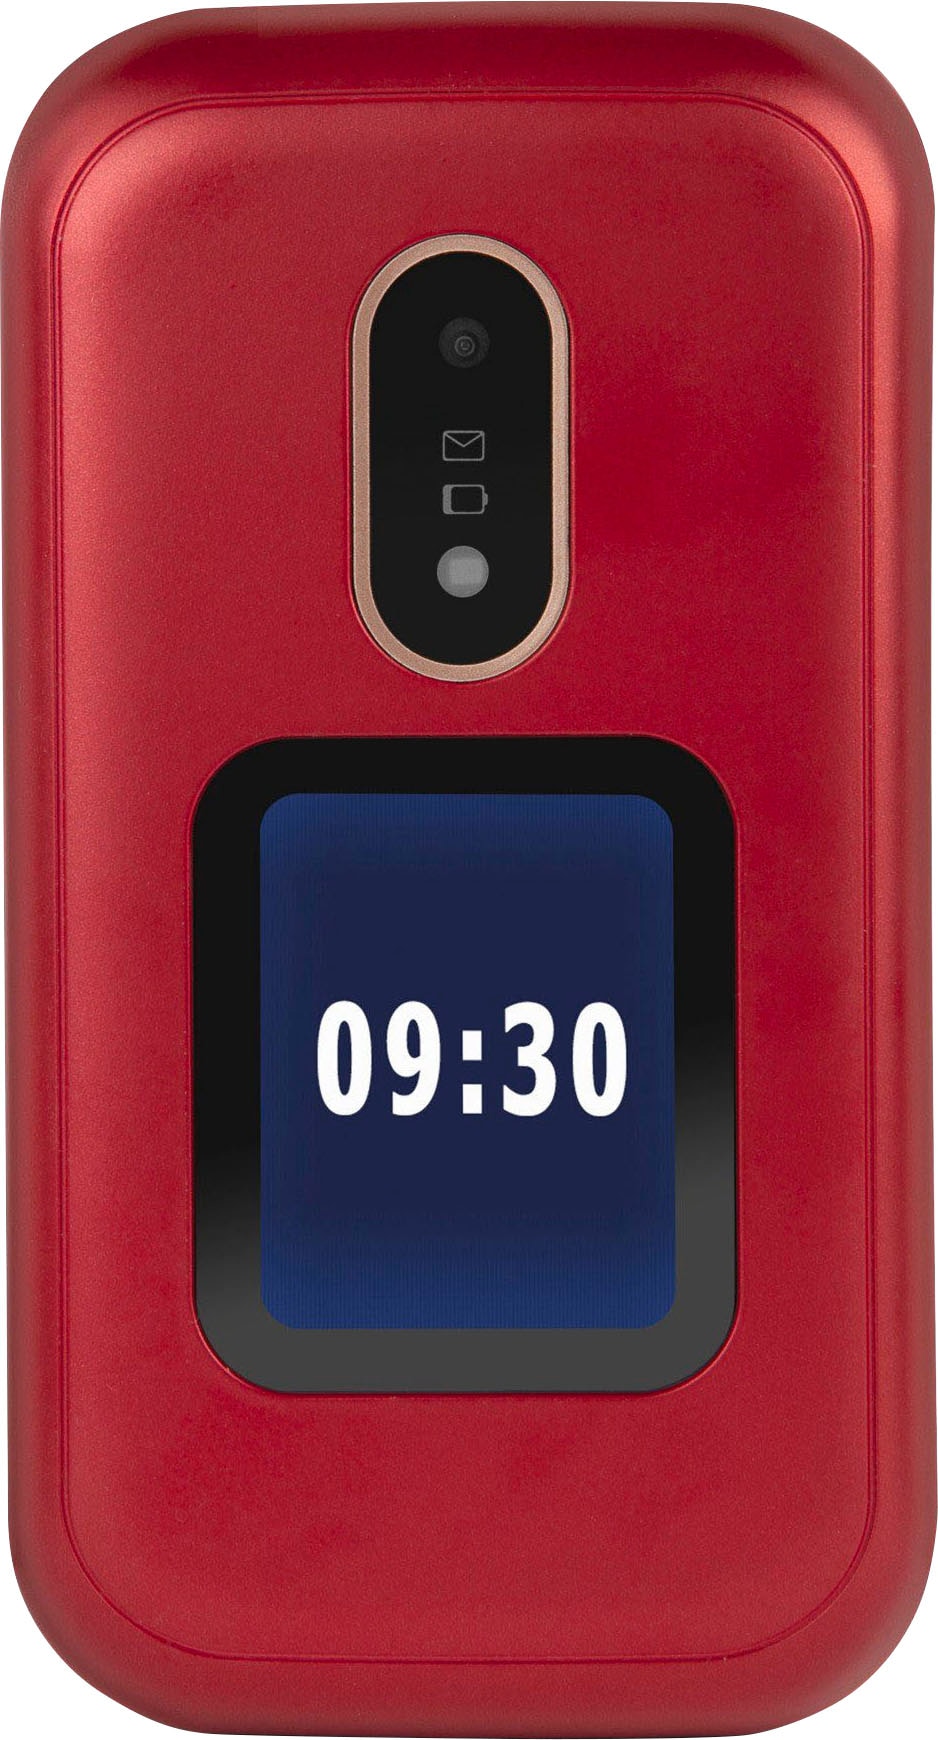 MP OTTO cm/2,8 3 »6060«, bei Handy Doro Zoll, kaufen jetzt Kamera 7,11 rot,